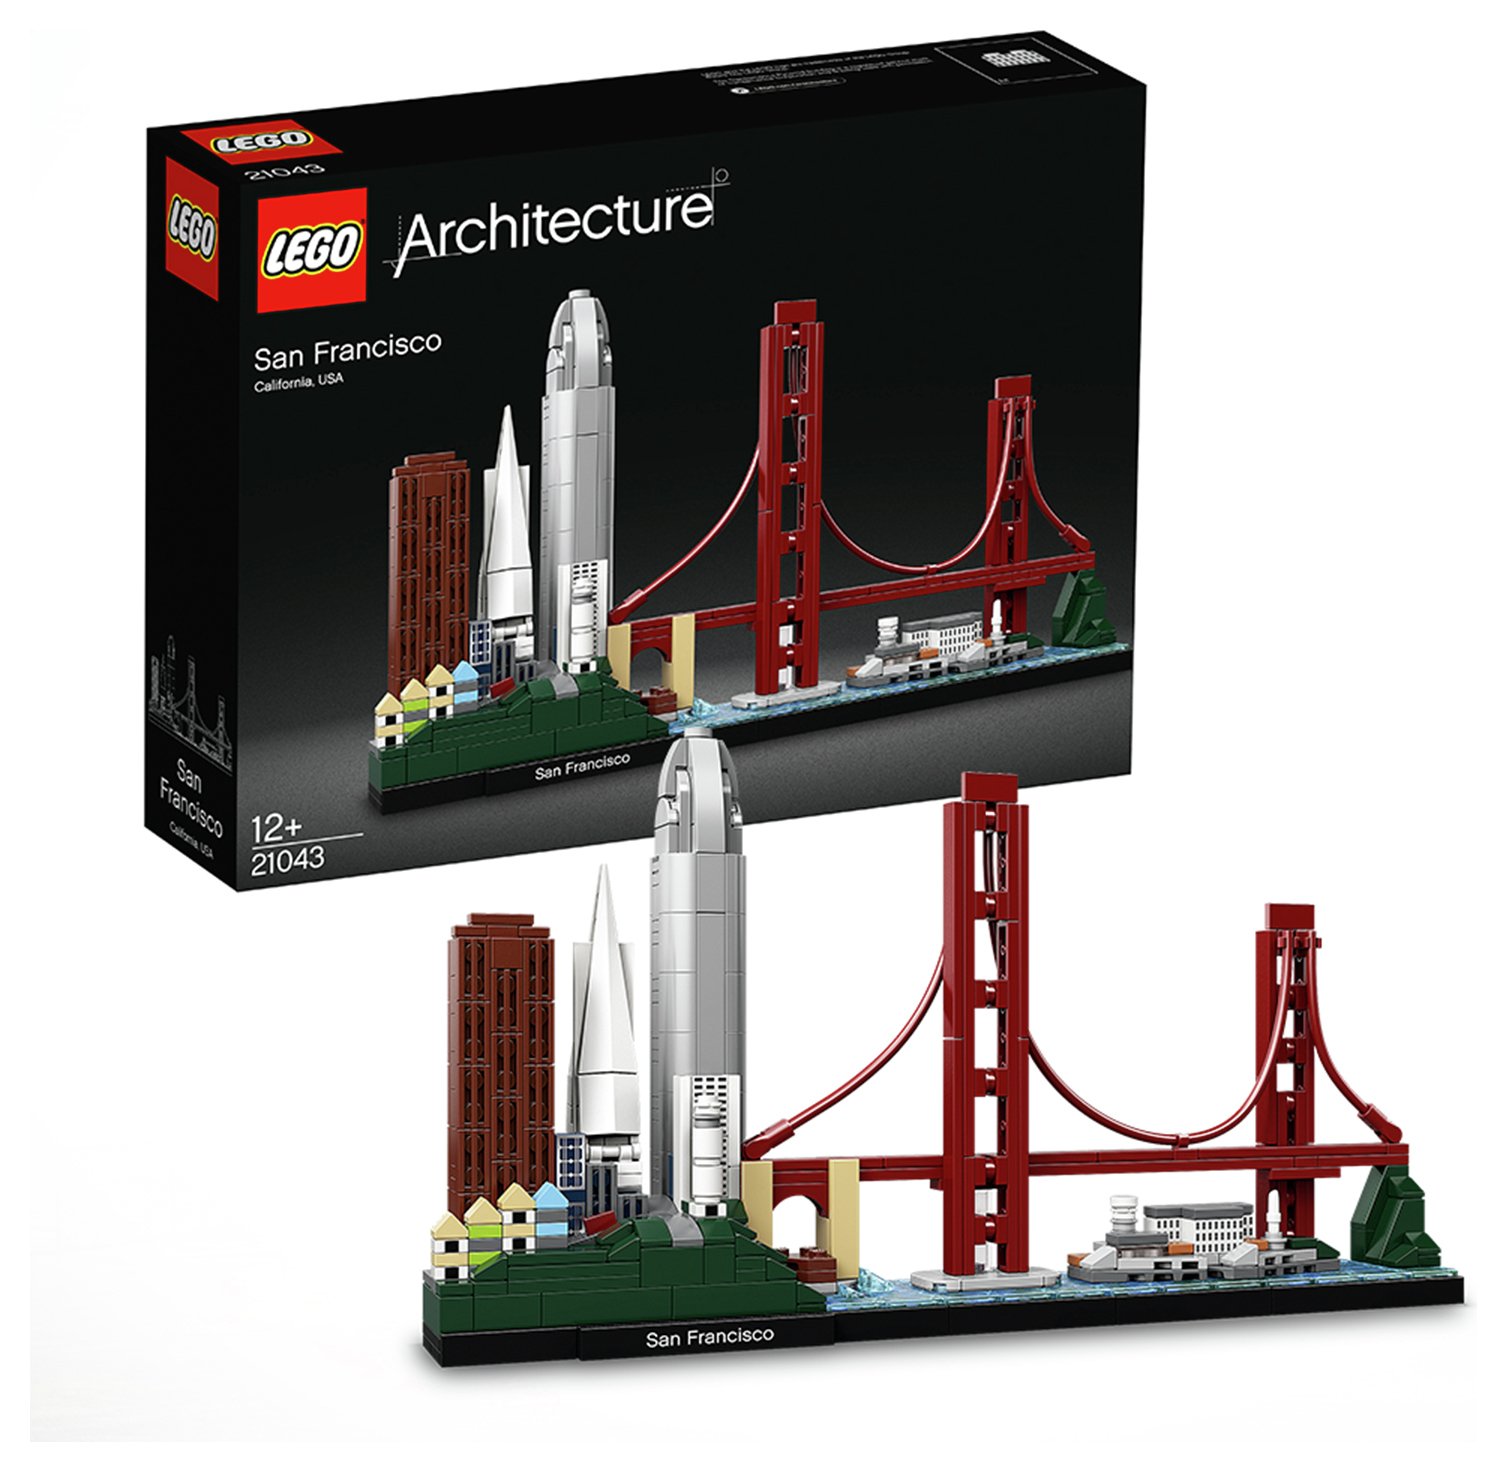 LEGO Architecture Skyline San Francisco Building Kit - 21043